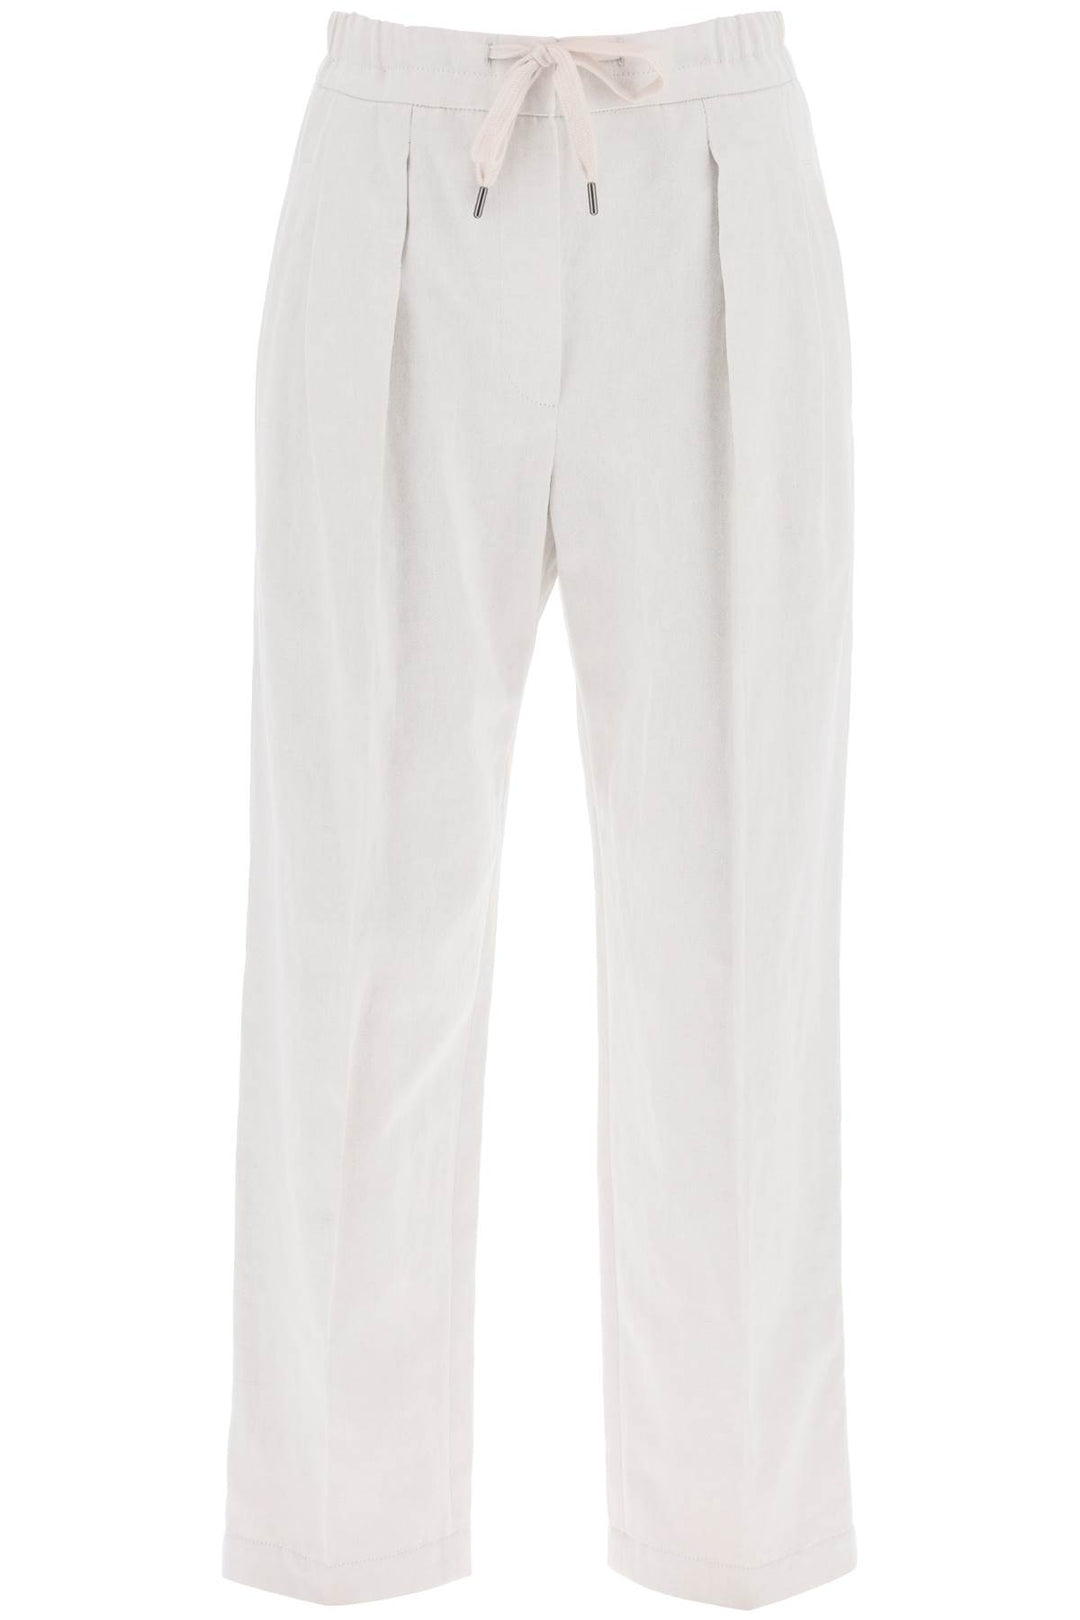 Brunello Cucinelli Cotton And Linen Slouchy Pants   Bianco